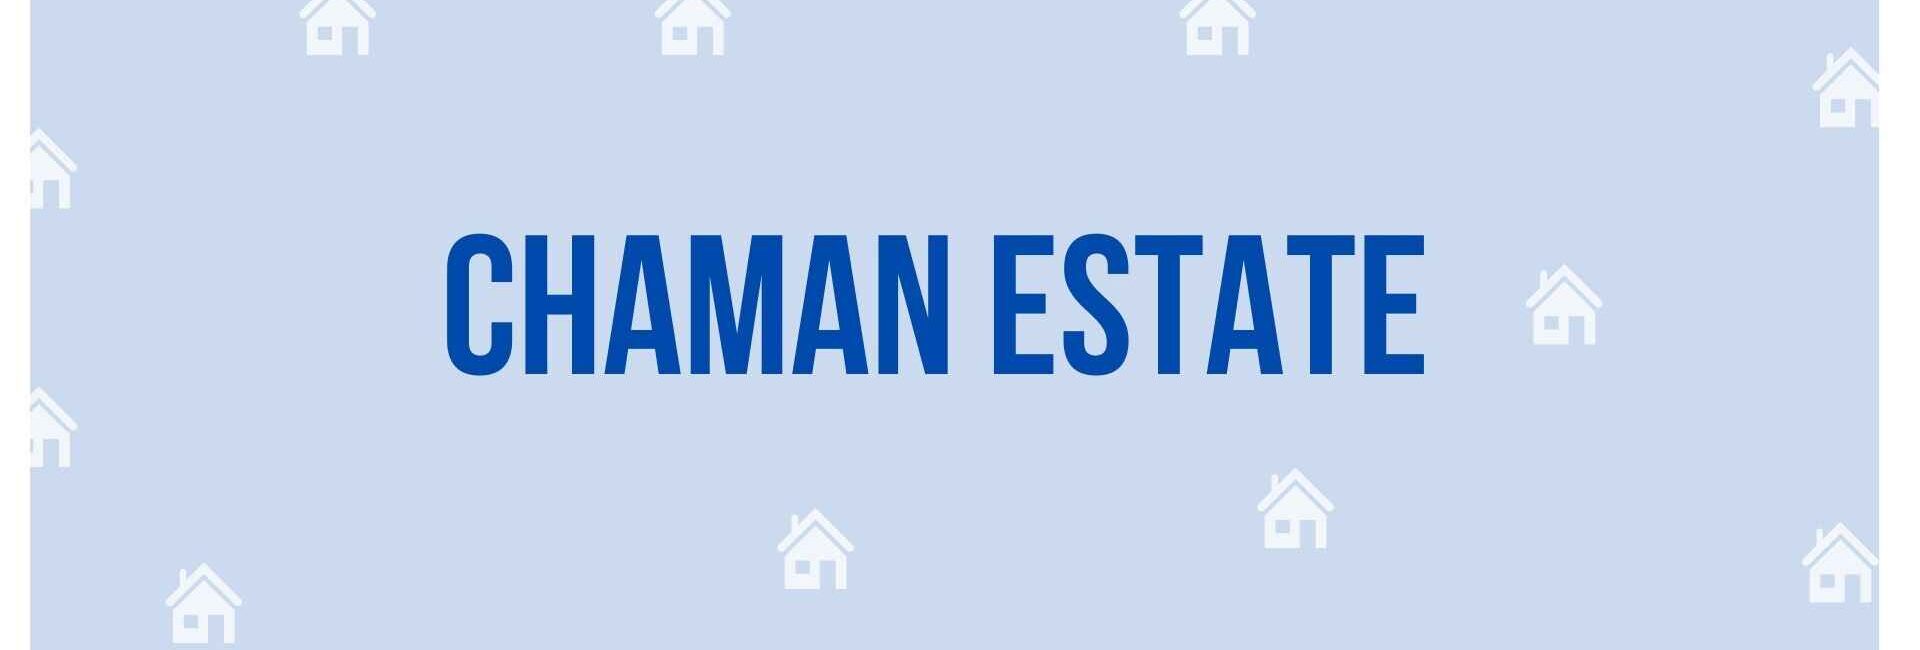 Chaman Estate - Property Dealer in Noida